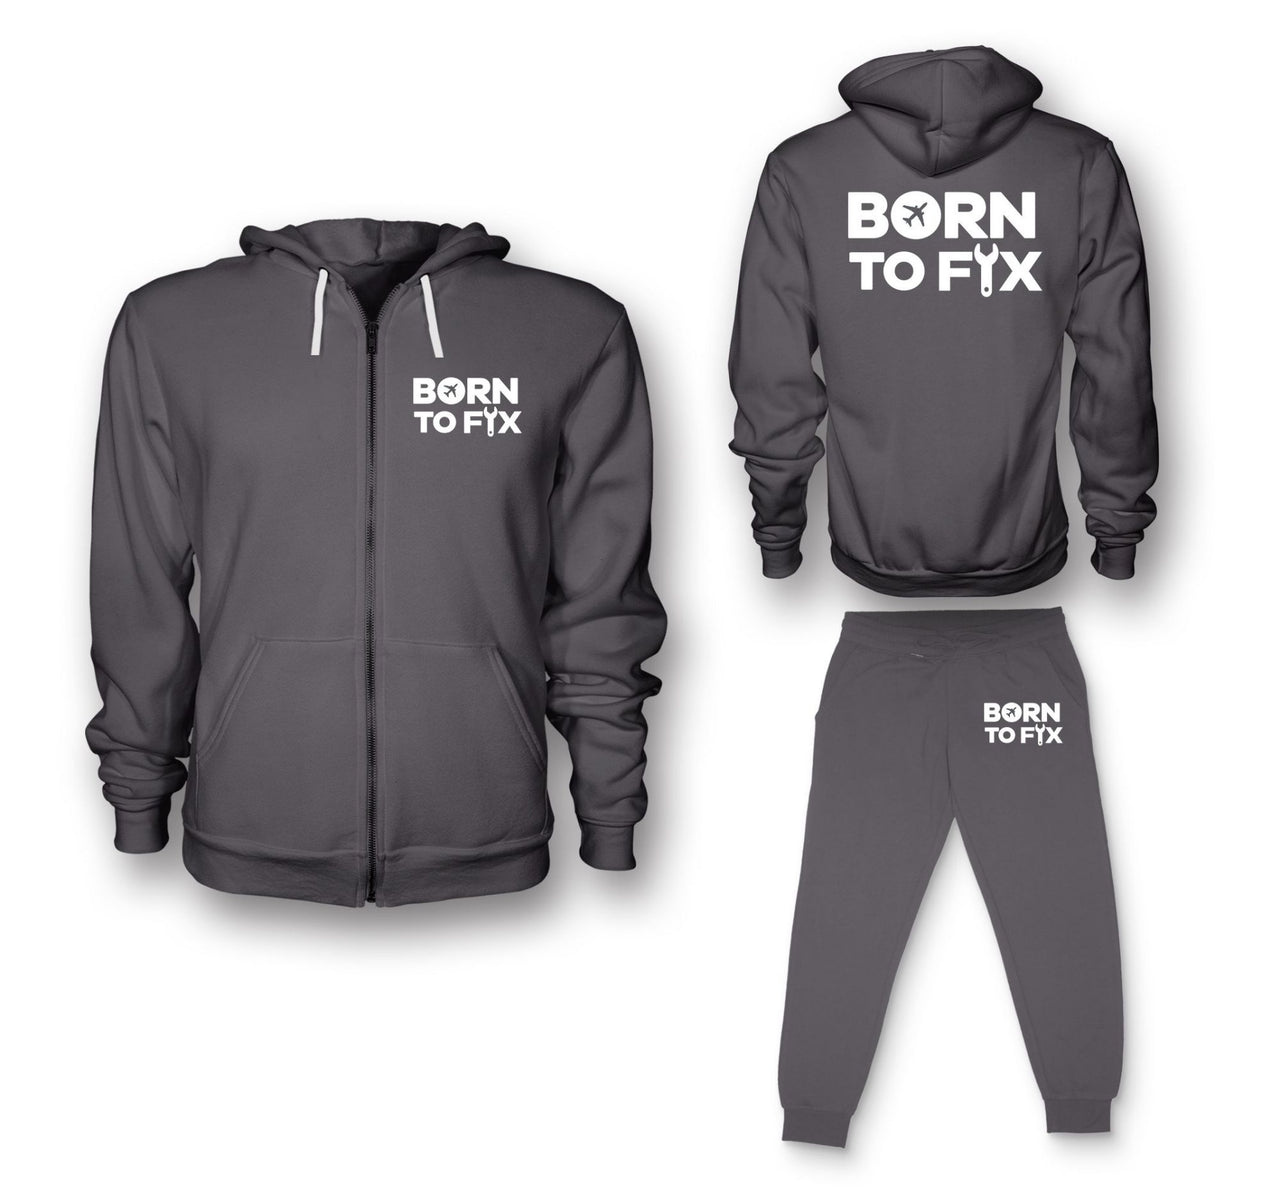 Born To Fix Airplanes Designed Zipped Hoodies & Sweatpants Set